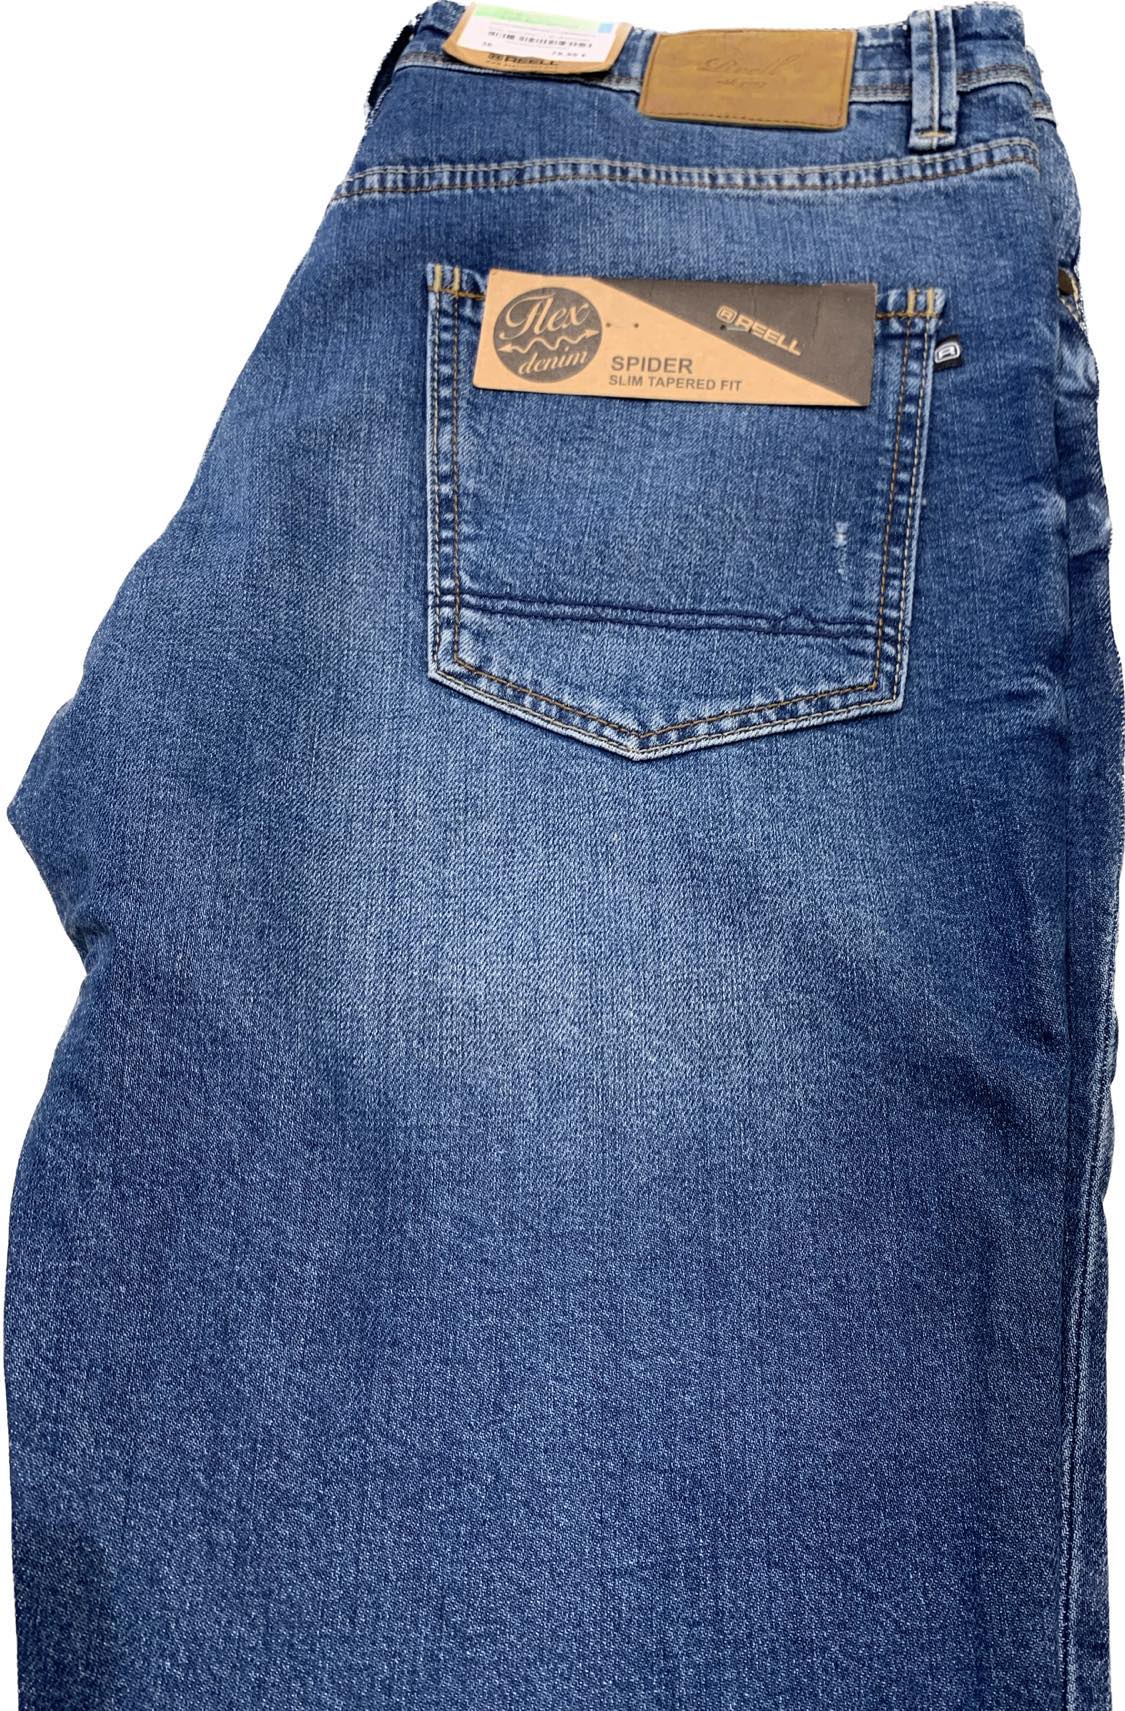 Reell Spider Slim Tapered Fit Jeans - Dark blue vintage